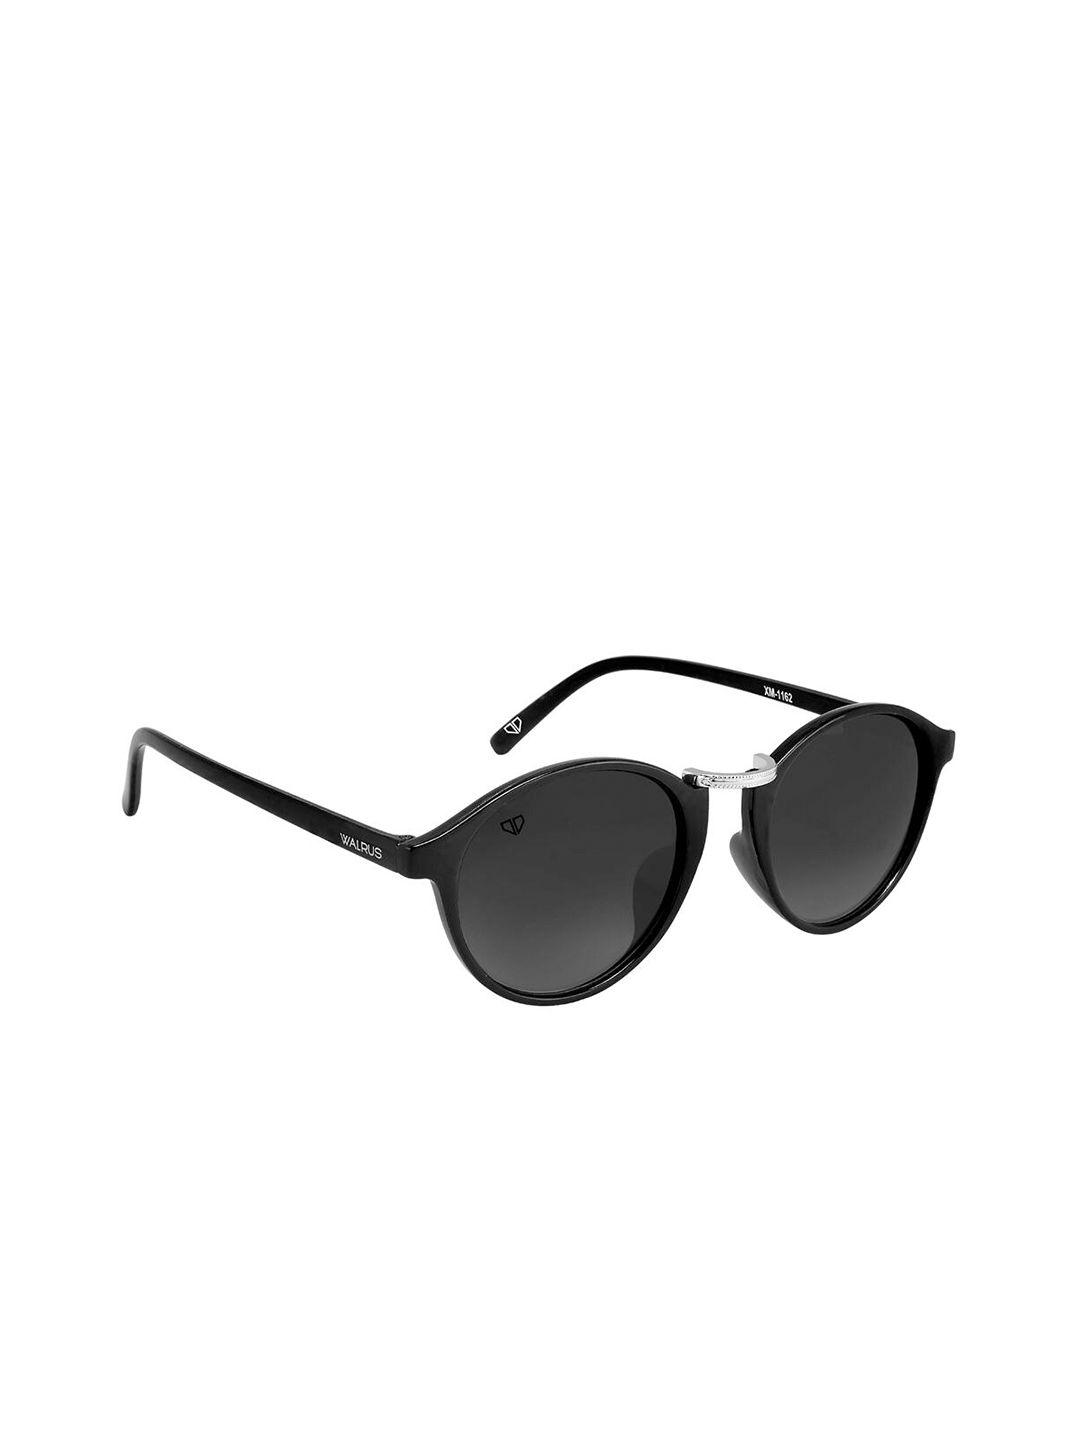 walrus men black lens & black oval sunglasses with uv protected lens